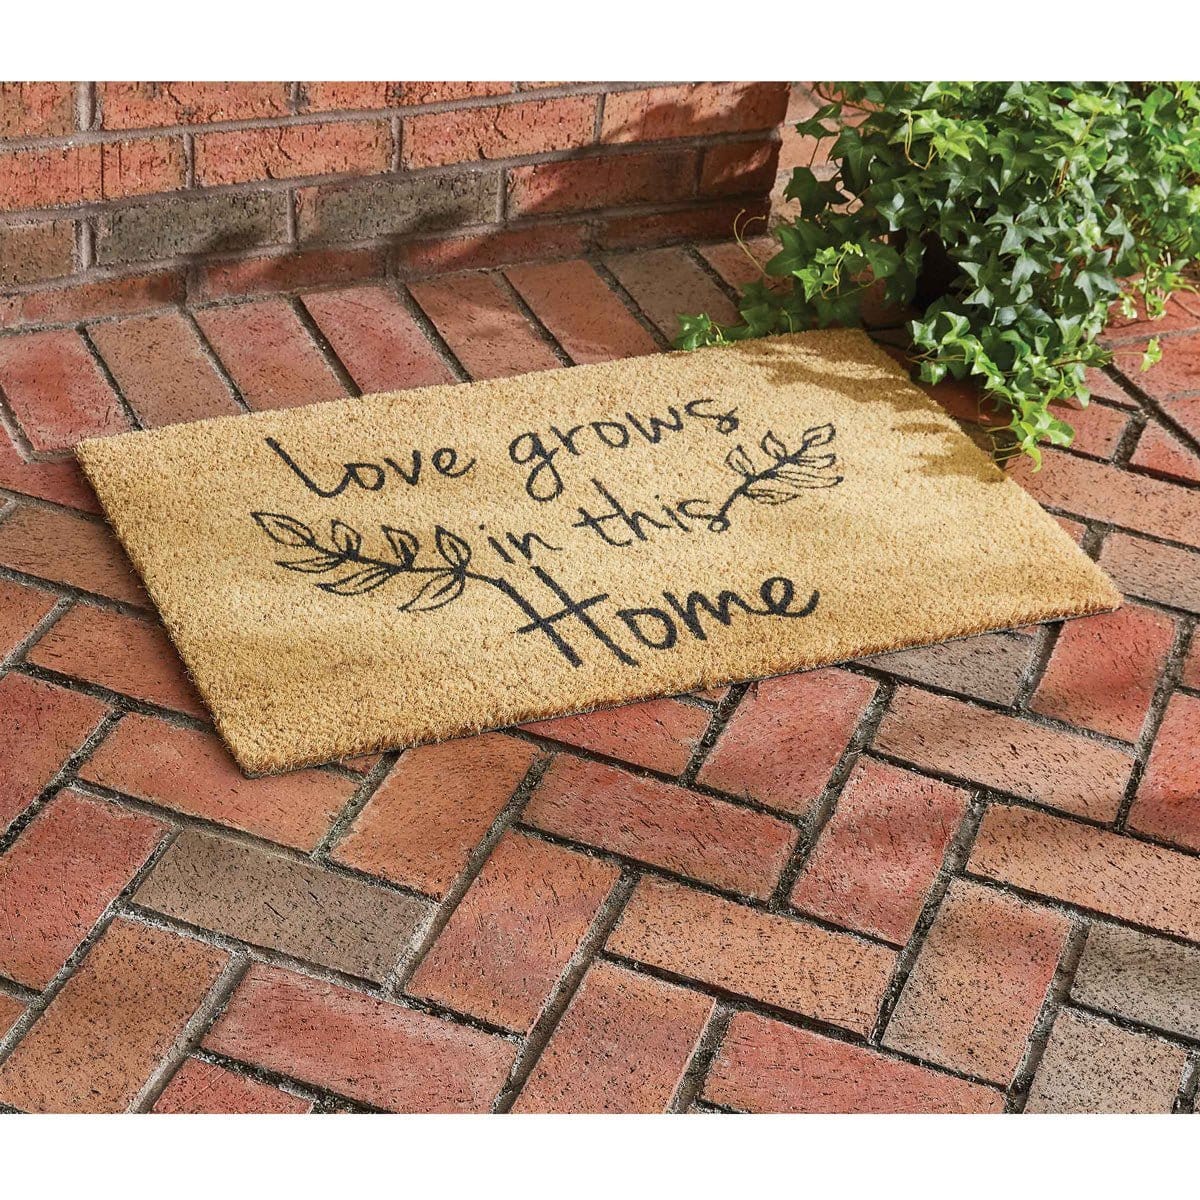 Coir Love Grows in this Home Doormat-Park Designs-The Village Merchant